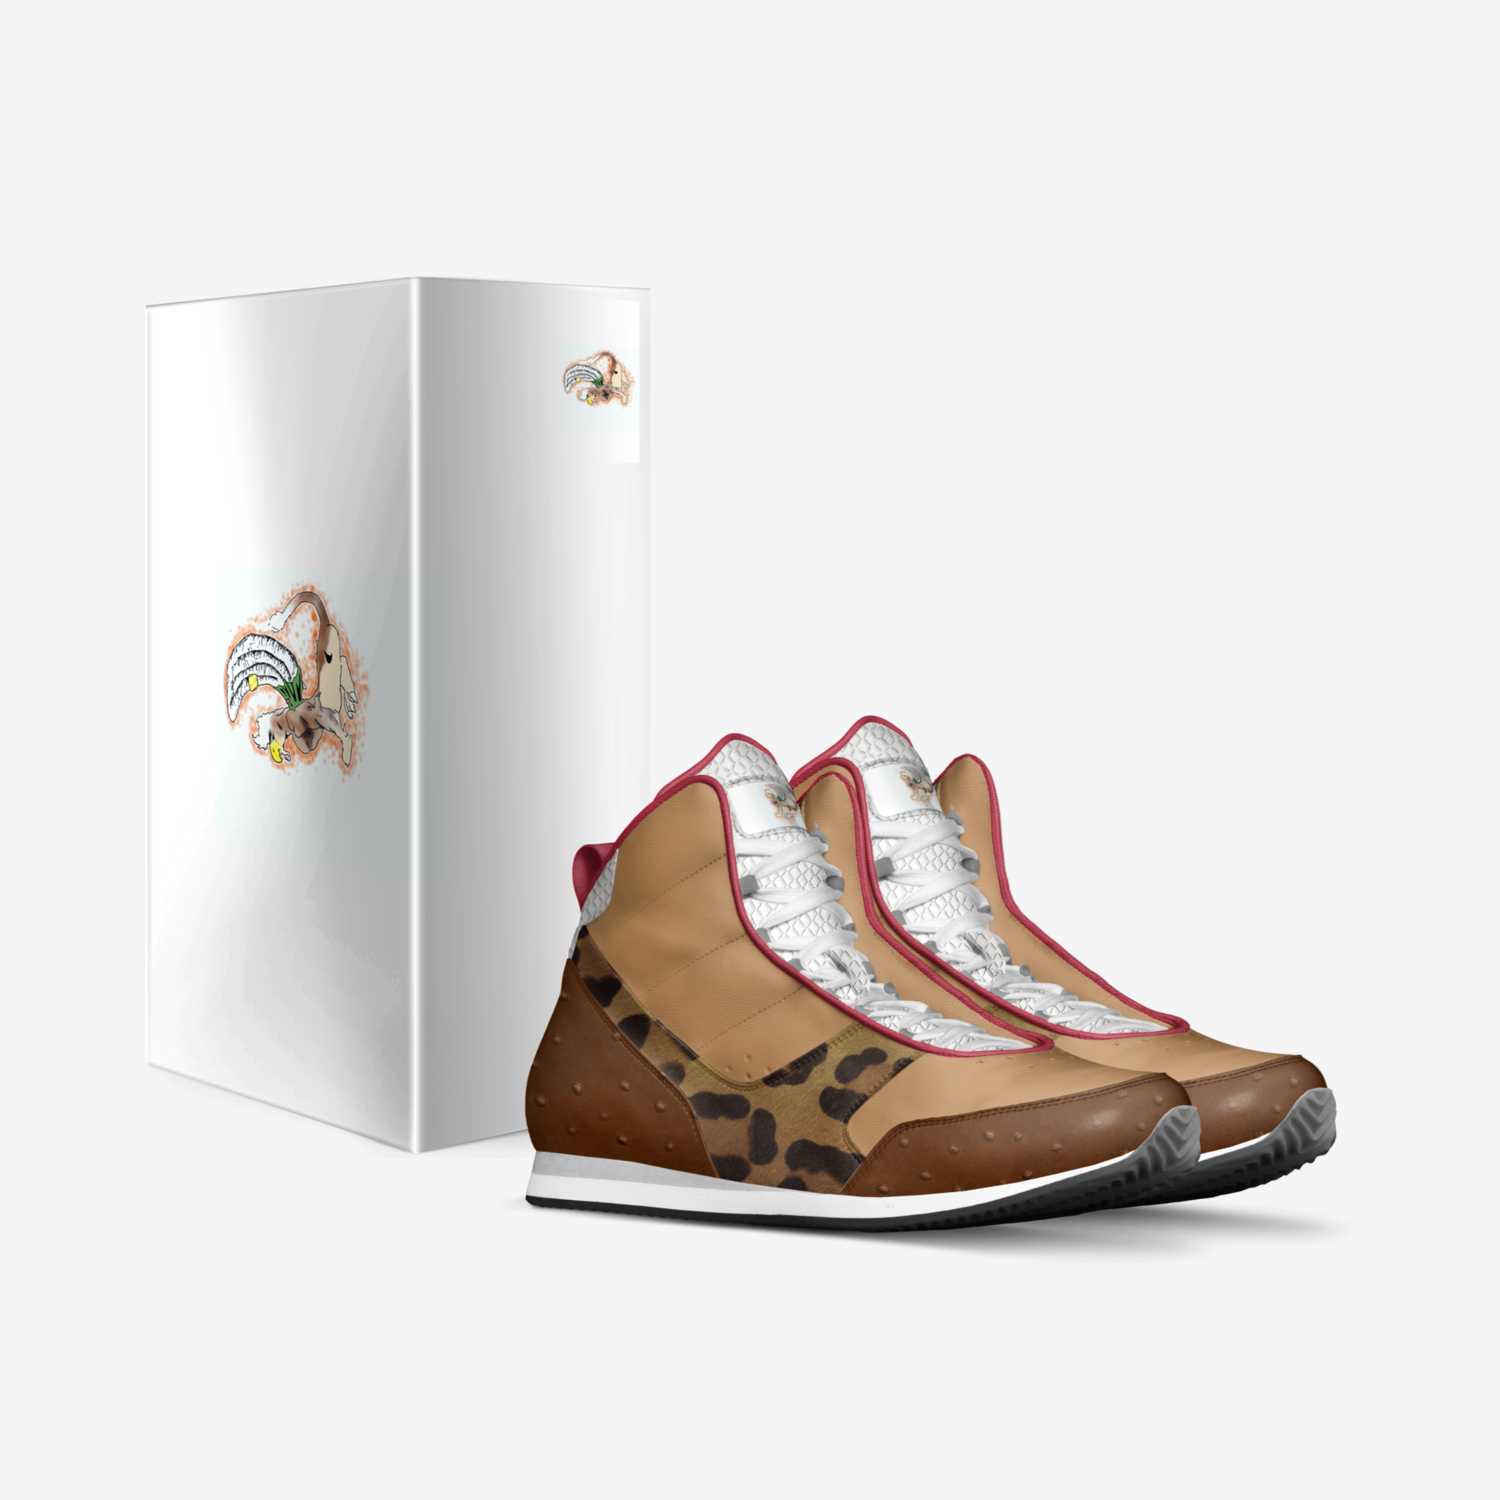 O J A I M A X I  custom made in Italy shoes by Maxie Ojai Bell | Box view